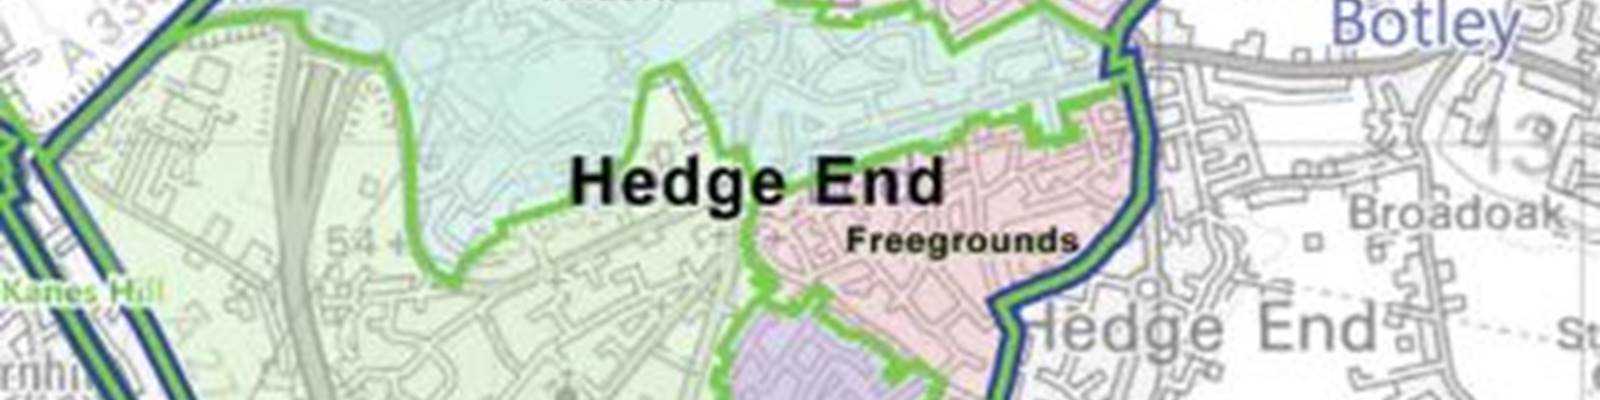 Hedge End Wards